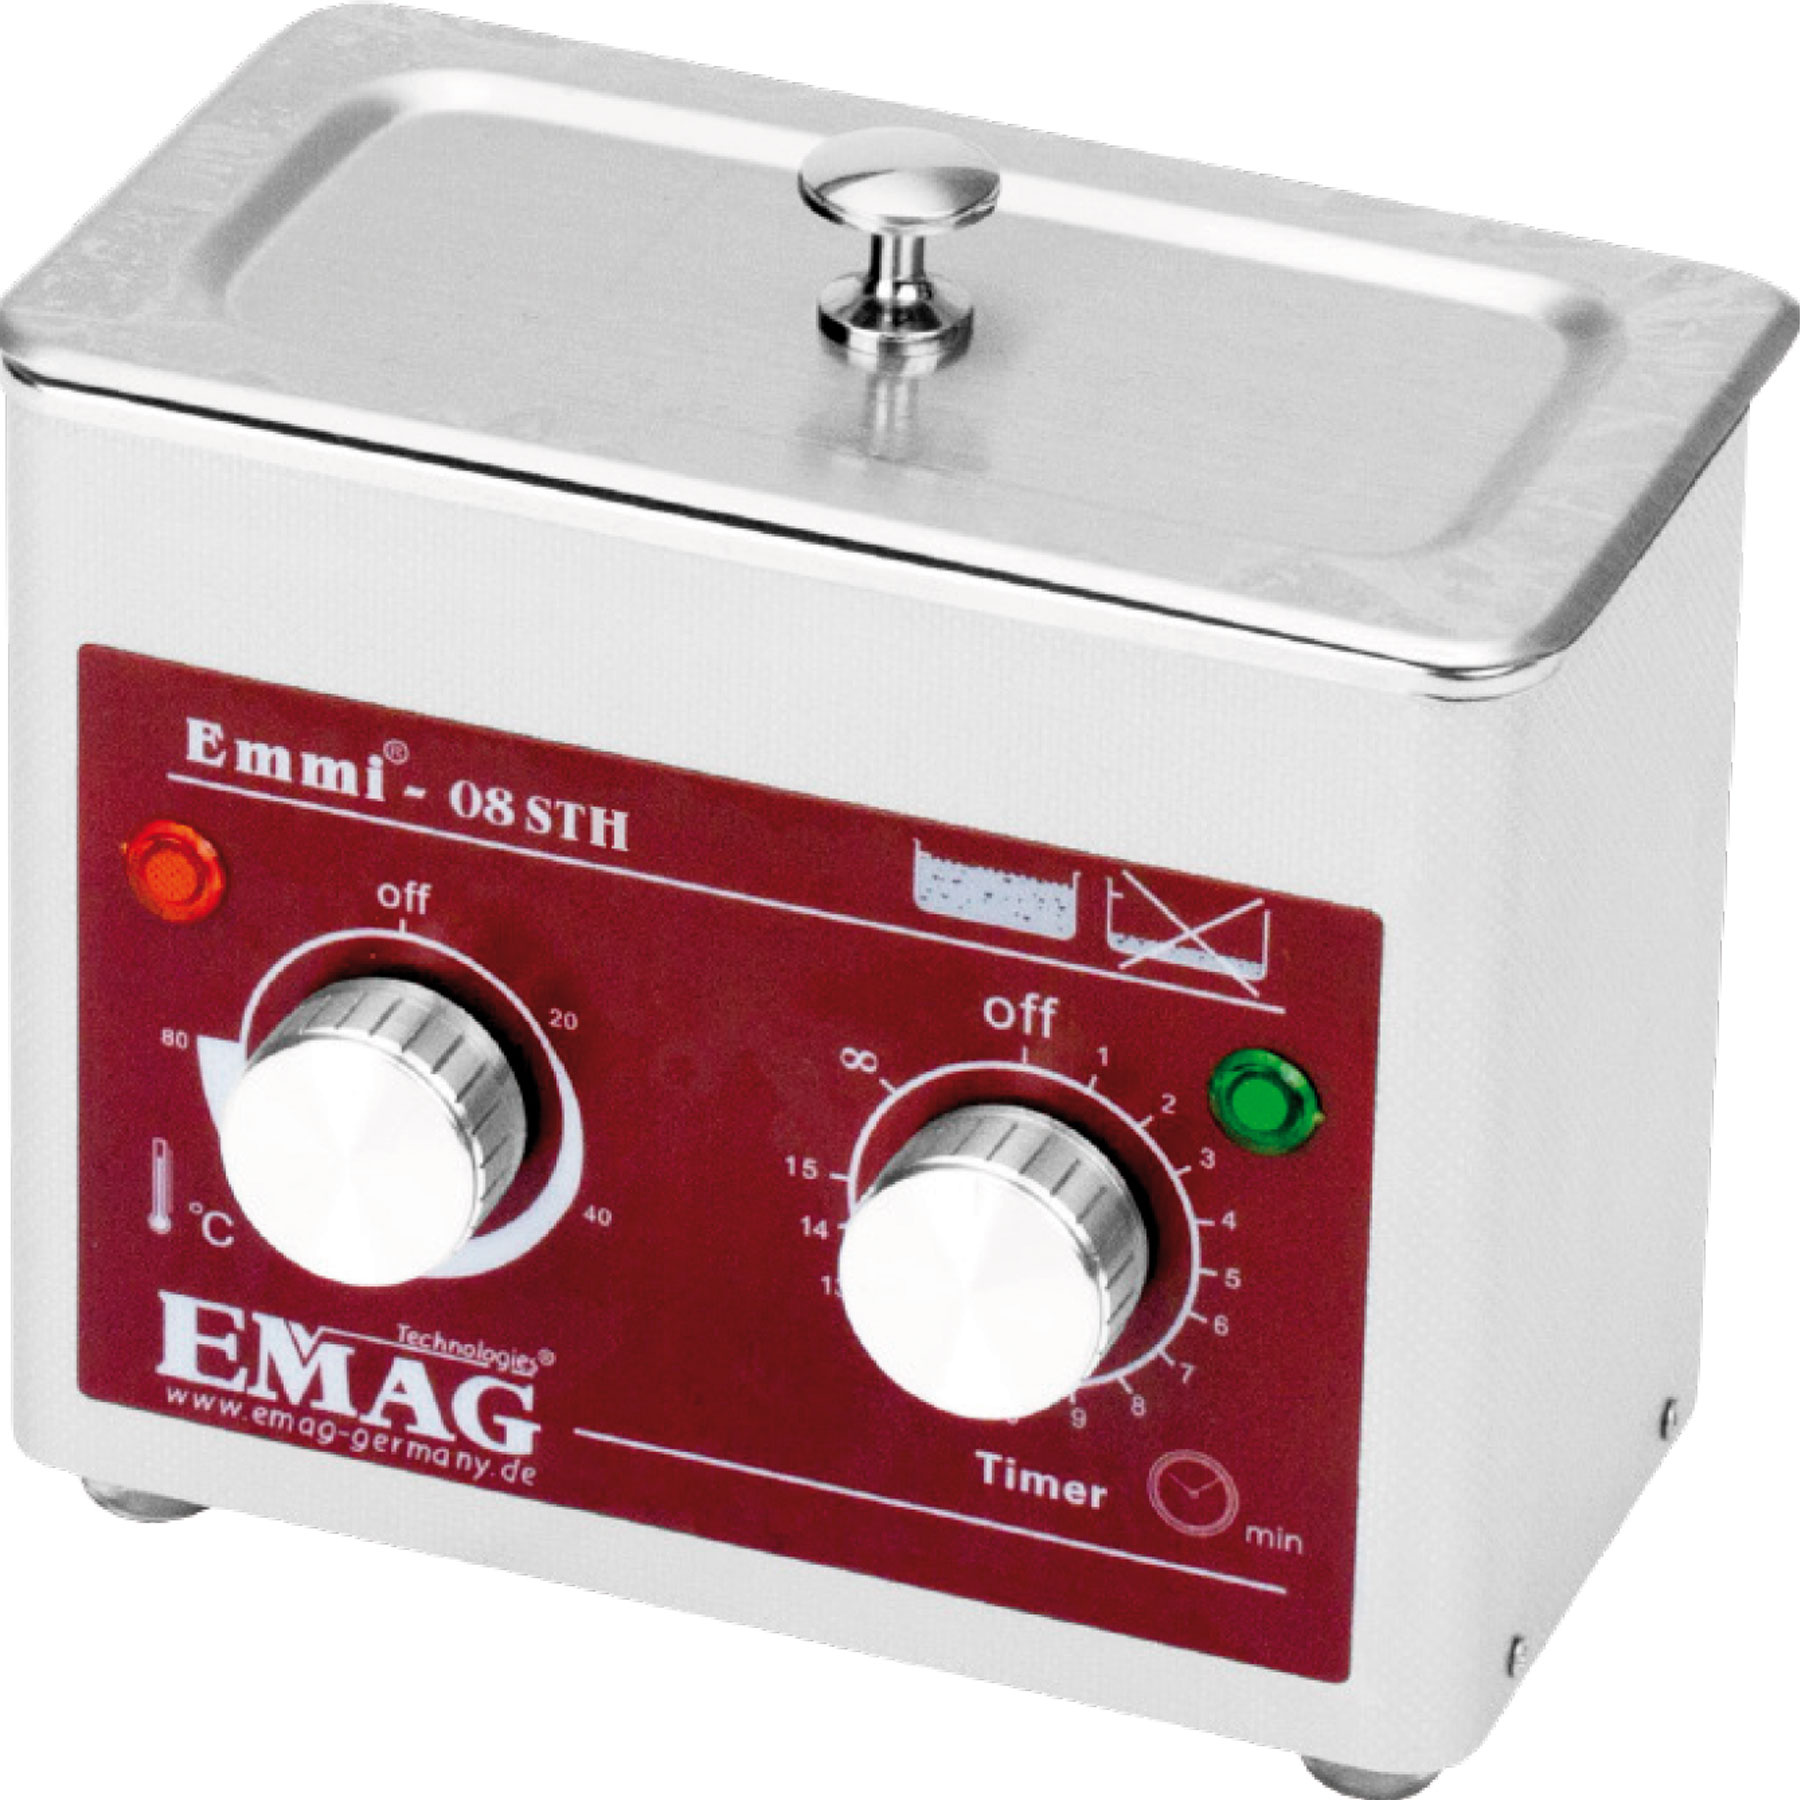 Appareil de nettoyage par ultrasons EMAG Emmi-08 STH en acier